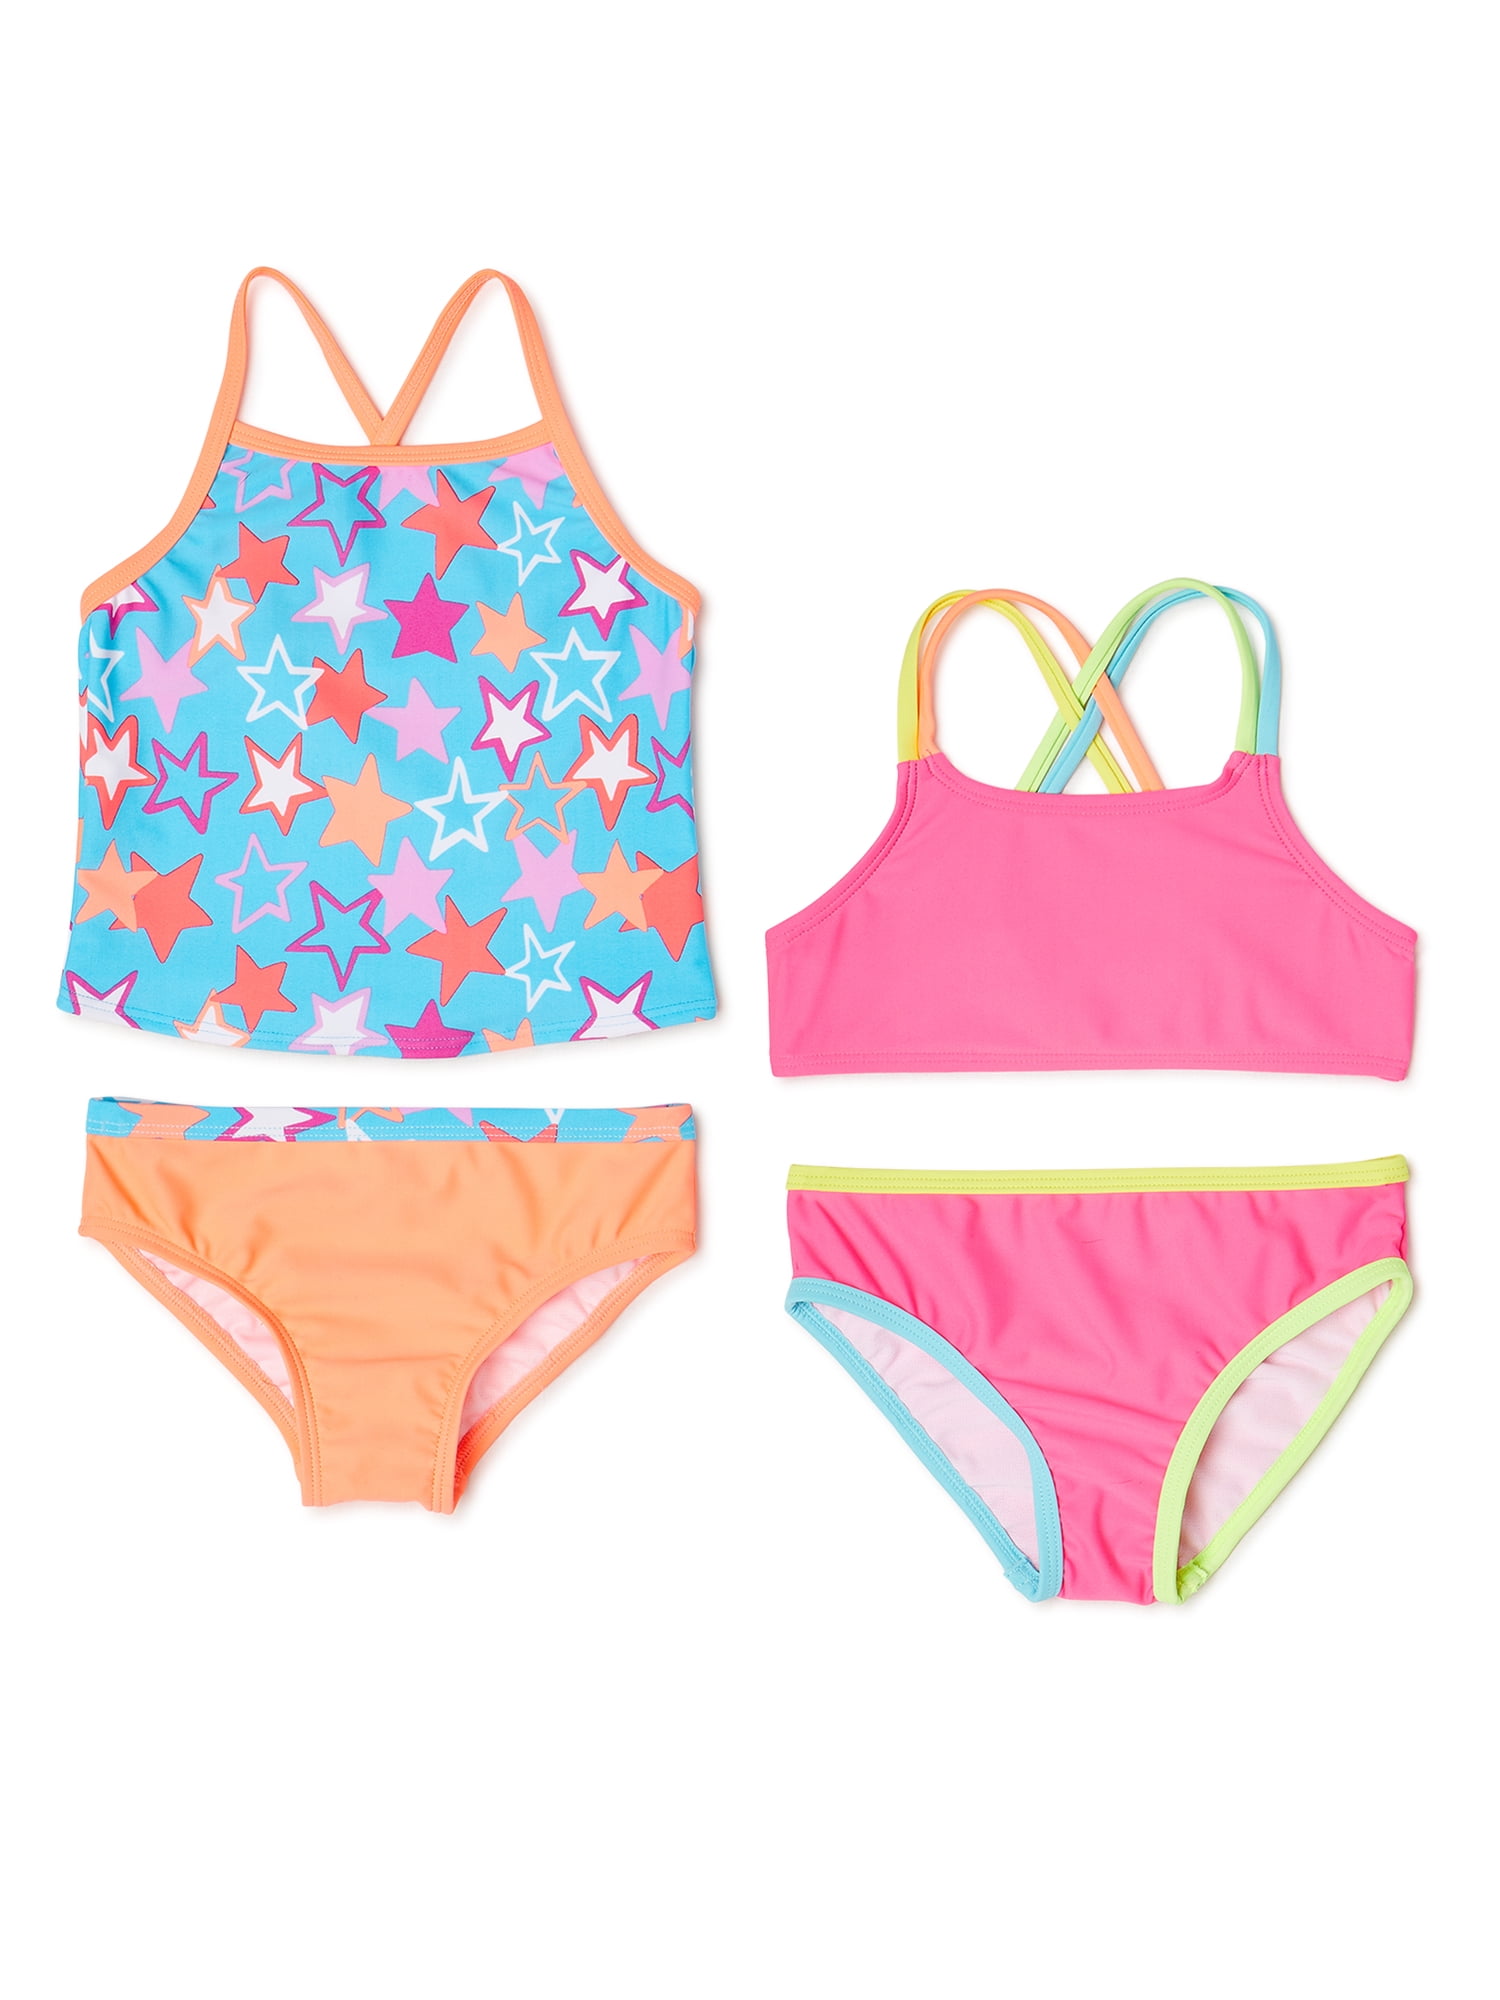 NWT JUSTICE Girl's Bikini Tankini Swimsuit Yellow Floral Flower Swim Size 8-16